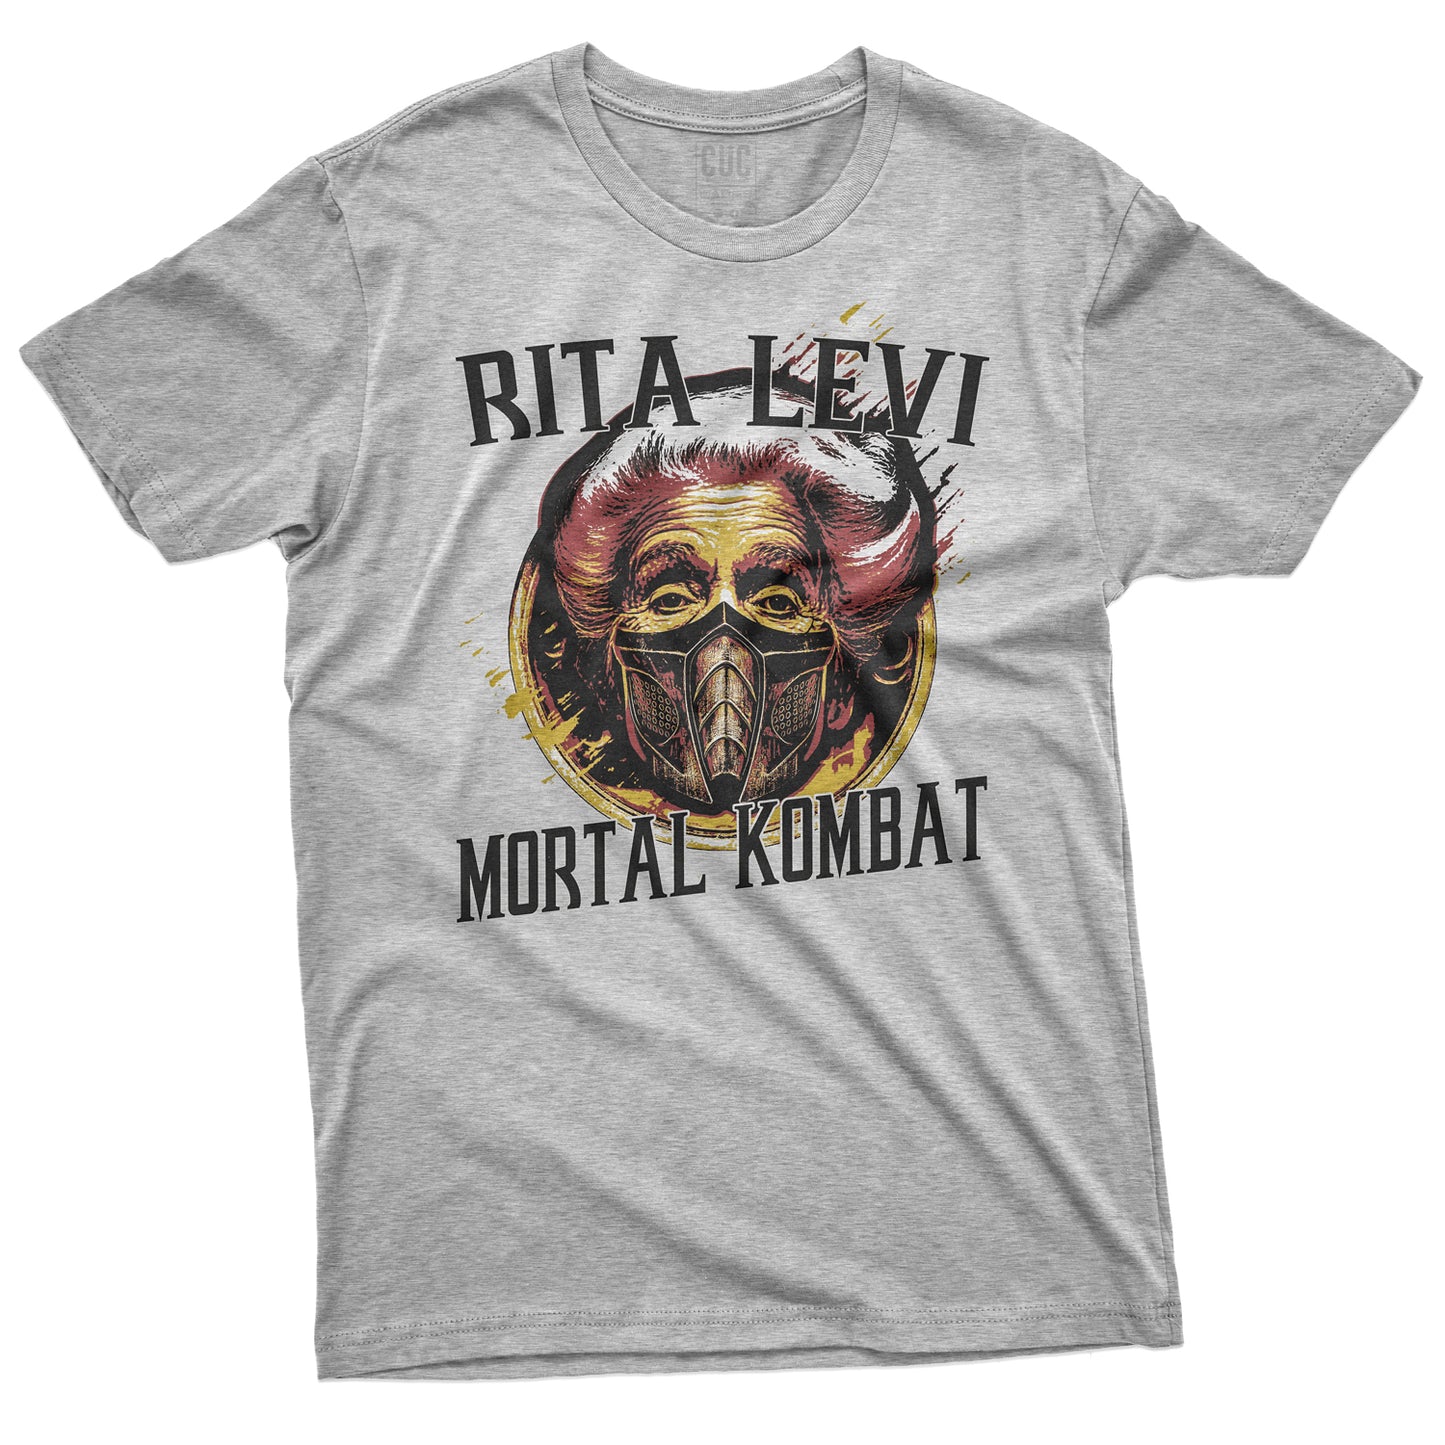 CUC T-Shirt RITA MK LIGHT - Rita Levi - Mortal Kombat #chooseurcolor